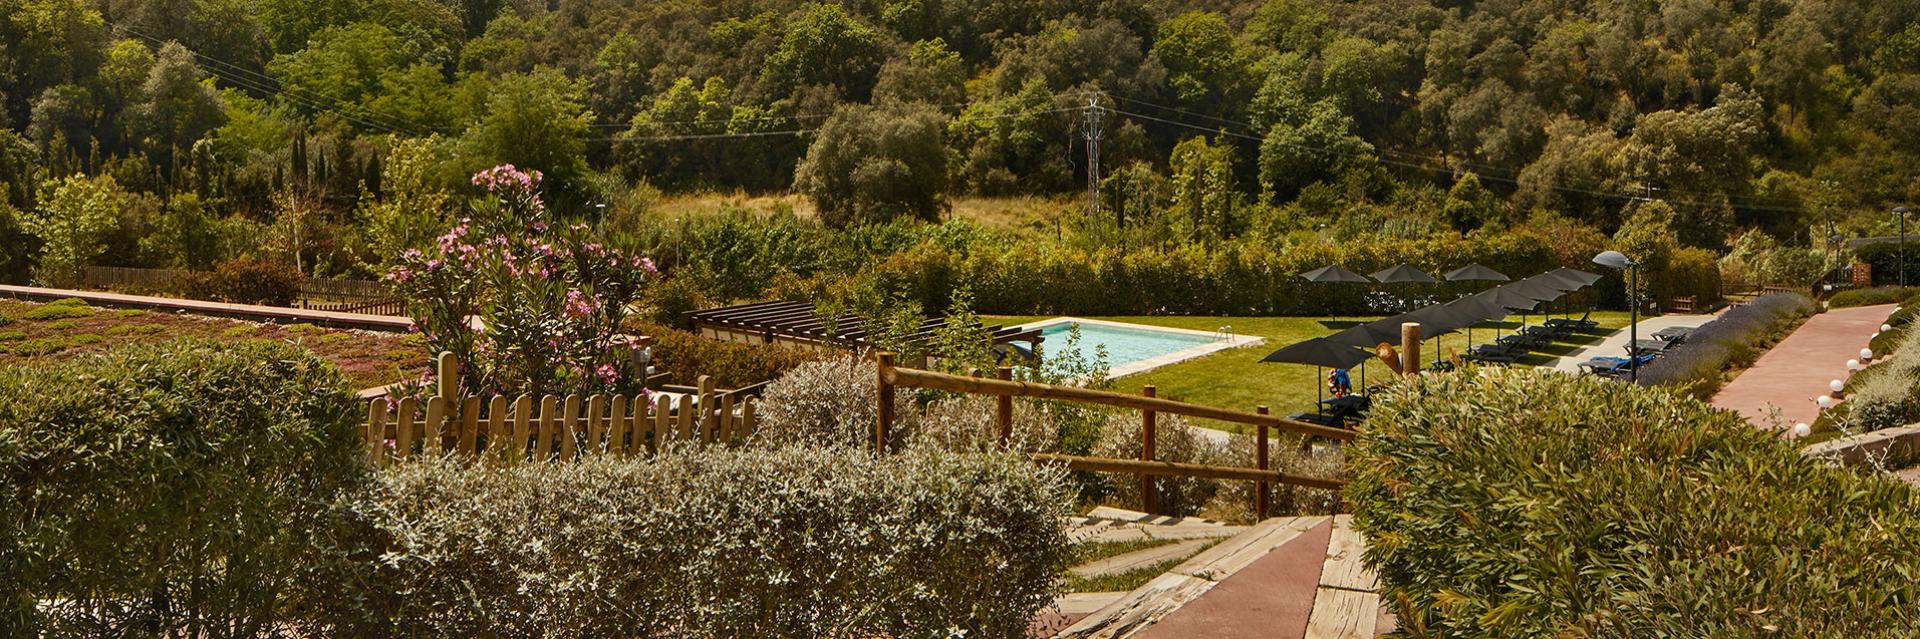 Mas Salagros Ecoresort Gardens and Pool